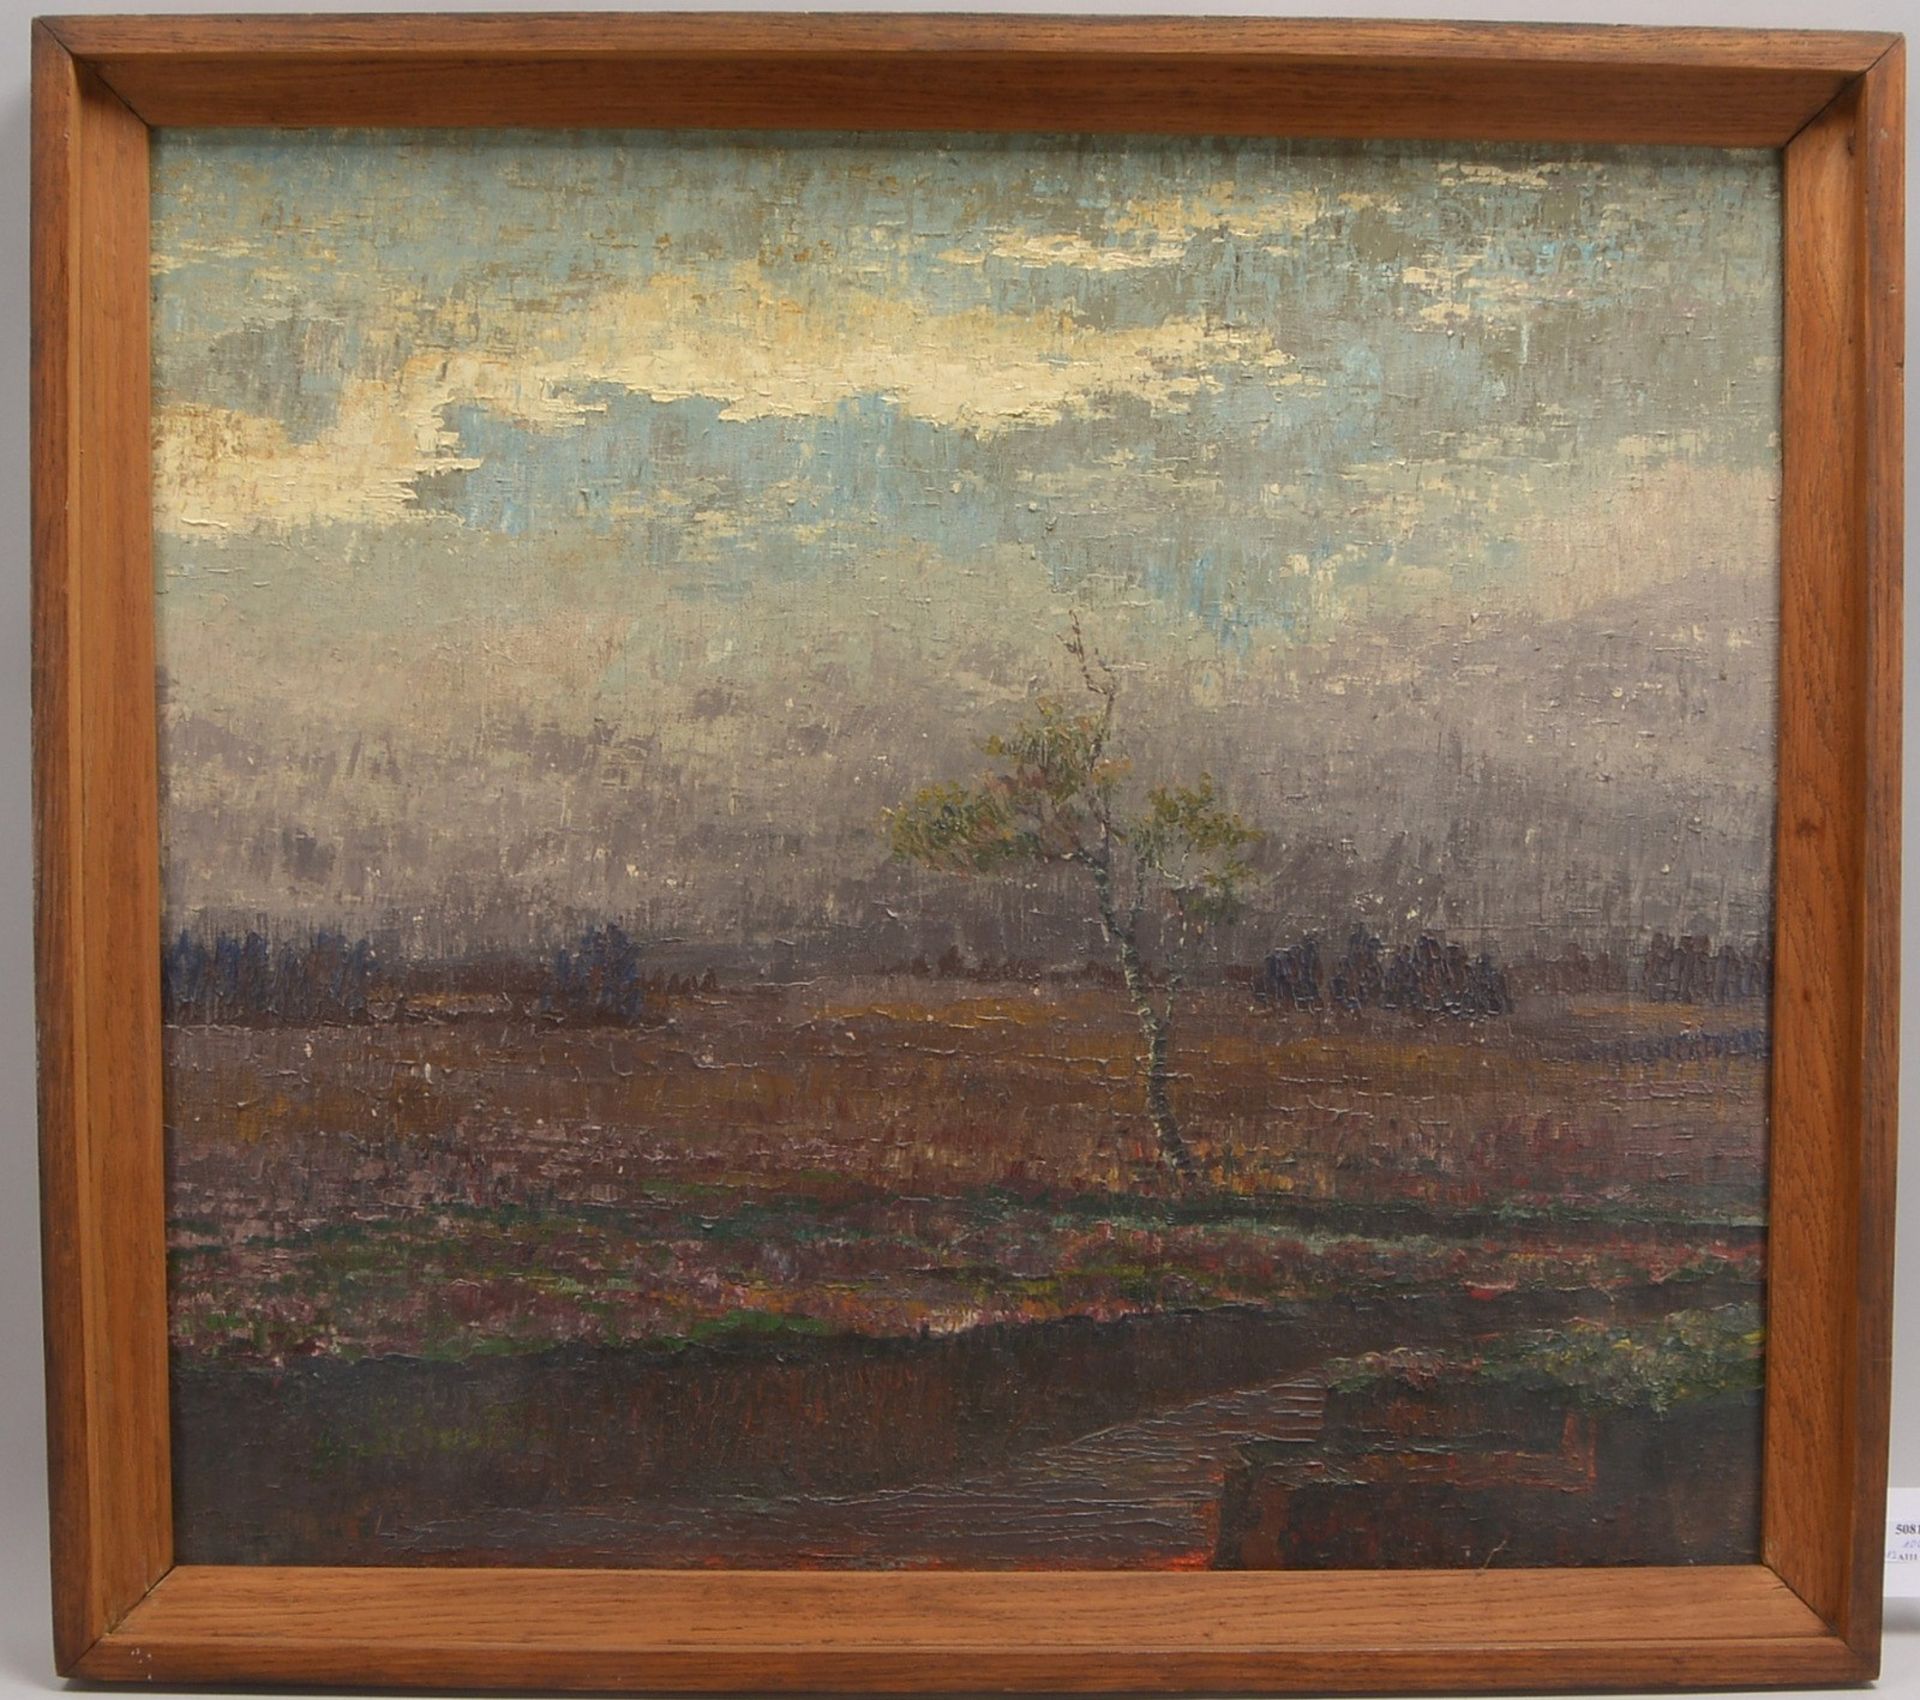 Schuster, H., 'Abend im Teufelsmoor', Öl/Lw, unten links signirt; Bildmaße 70 x 80 cm, Rahmenmaße 78